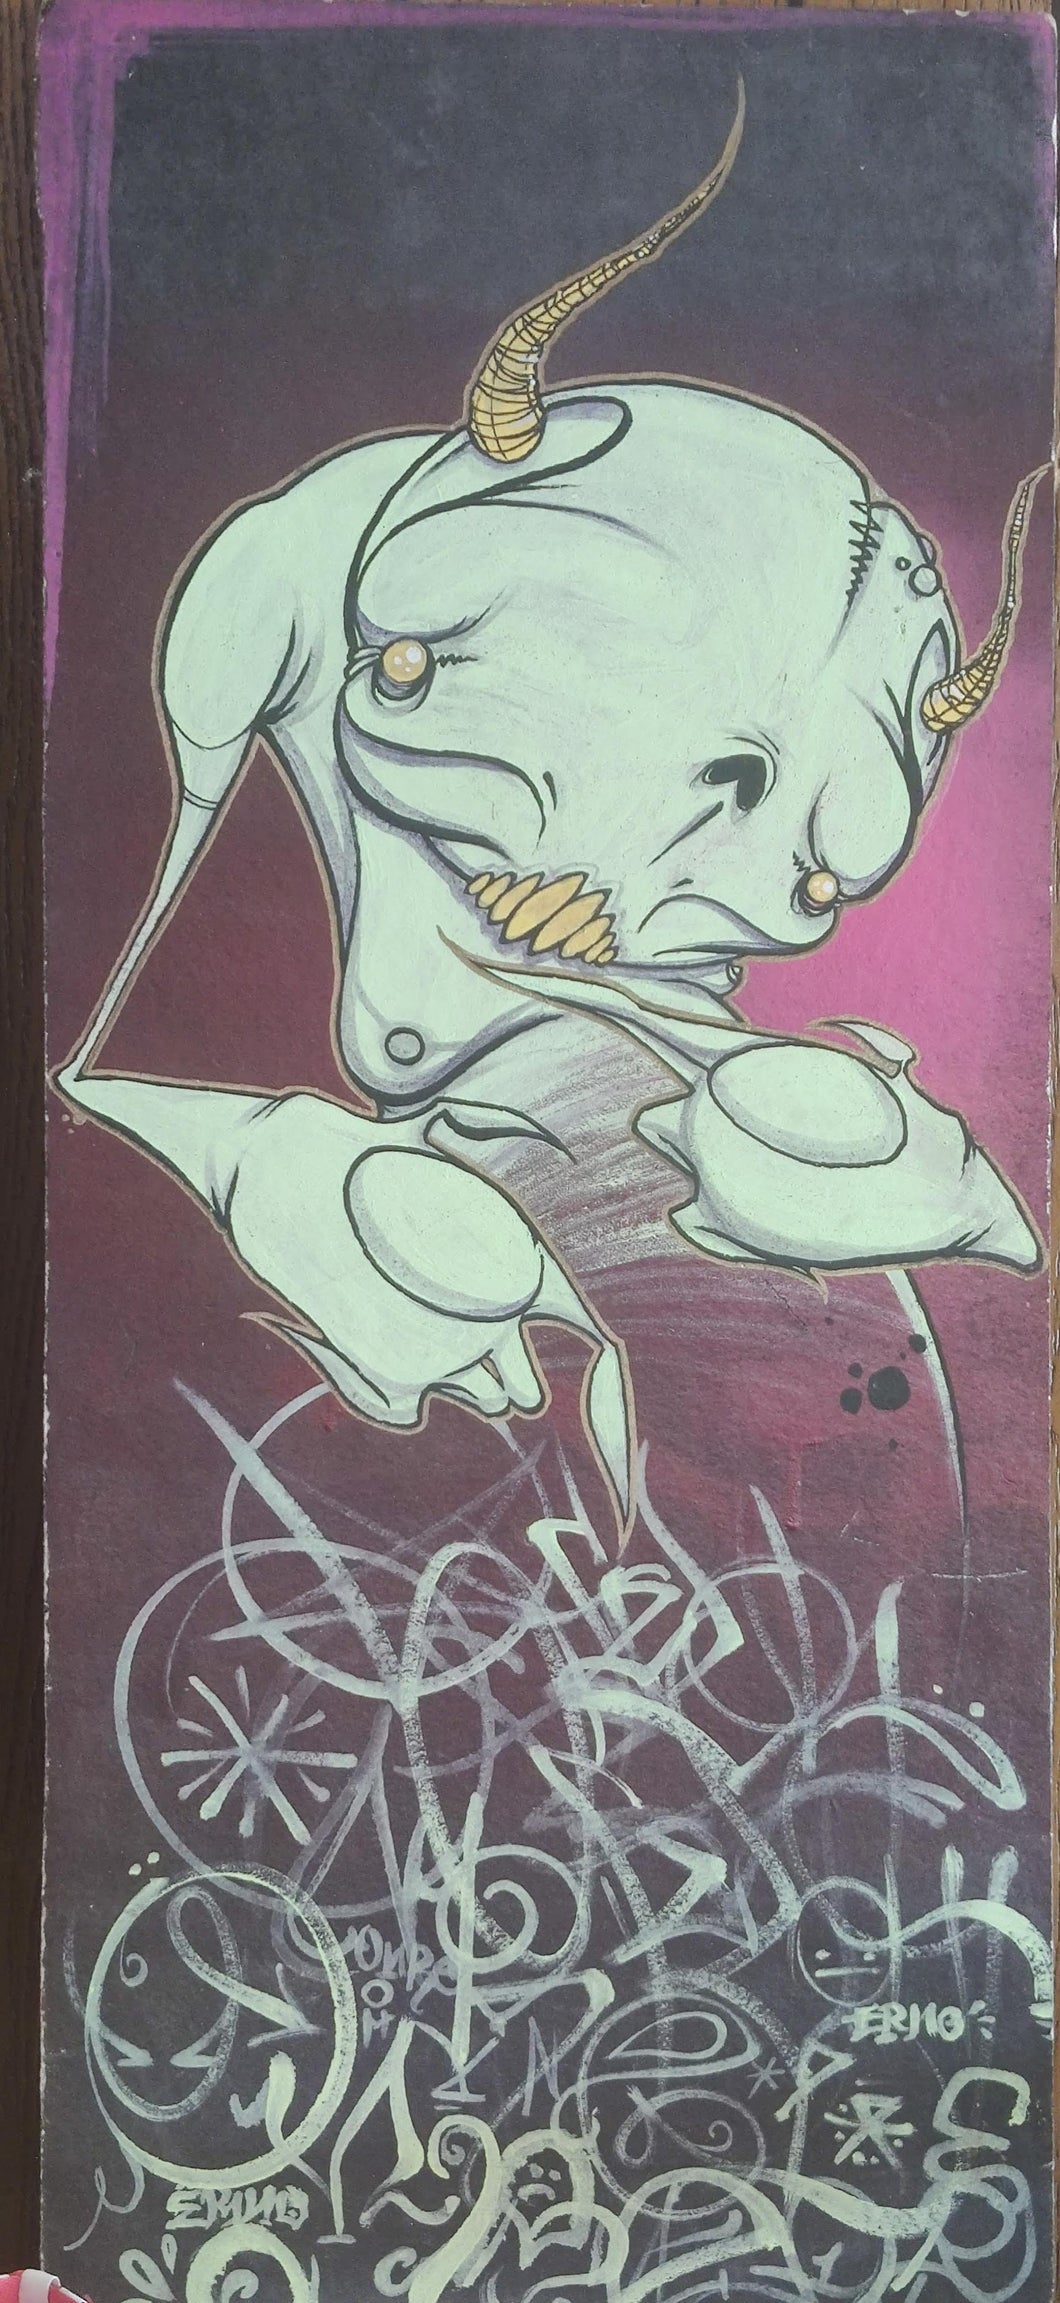 (Alien Graffiti Panel) By Aigo